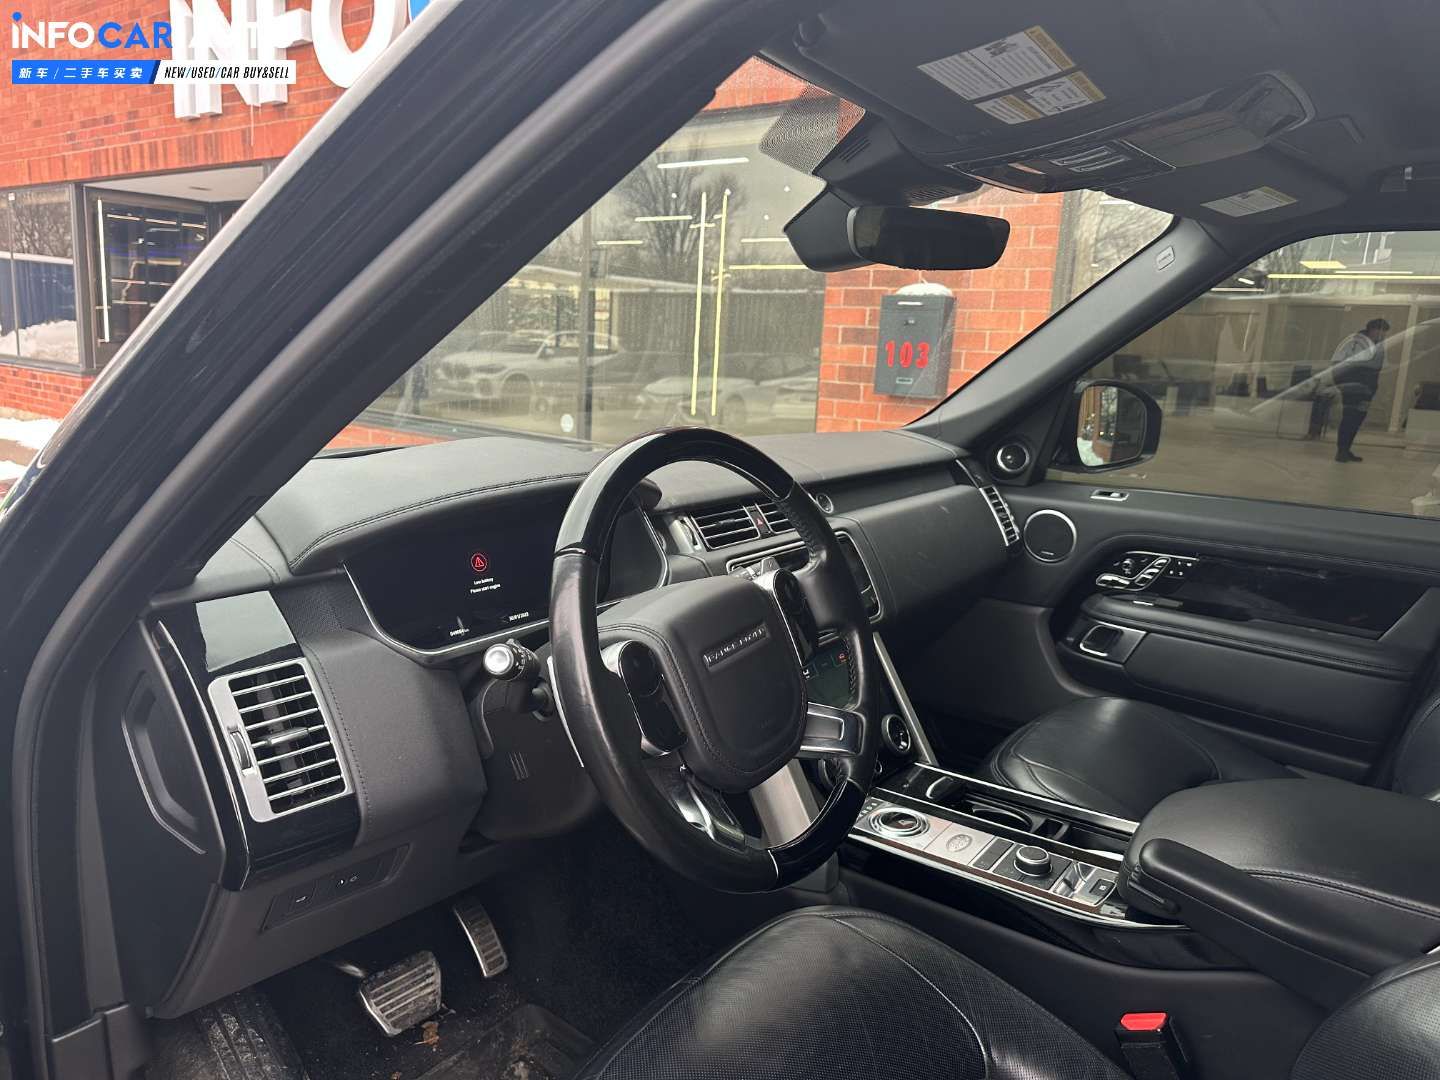 2018 Land Rover Range Rover AUTOBIOGRAPHY - INFOCAR - Toronto Auto Trading Platform